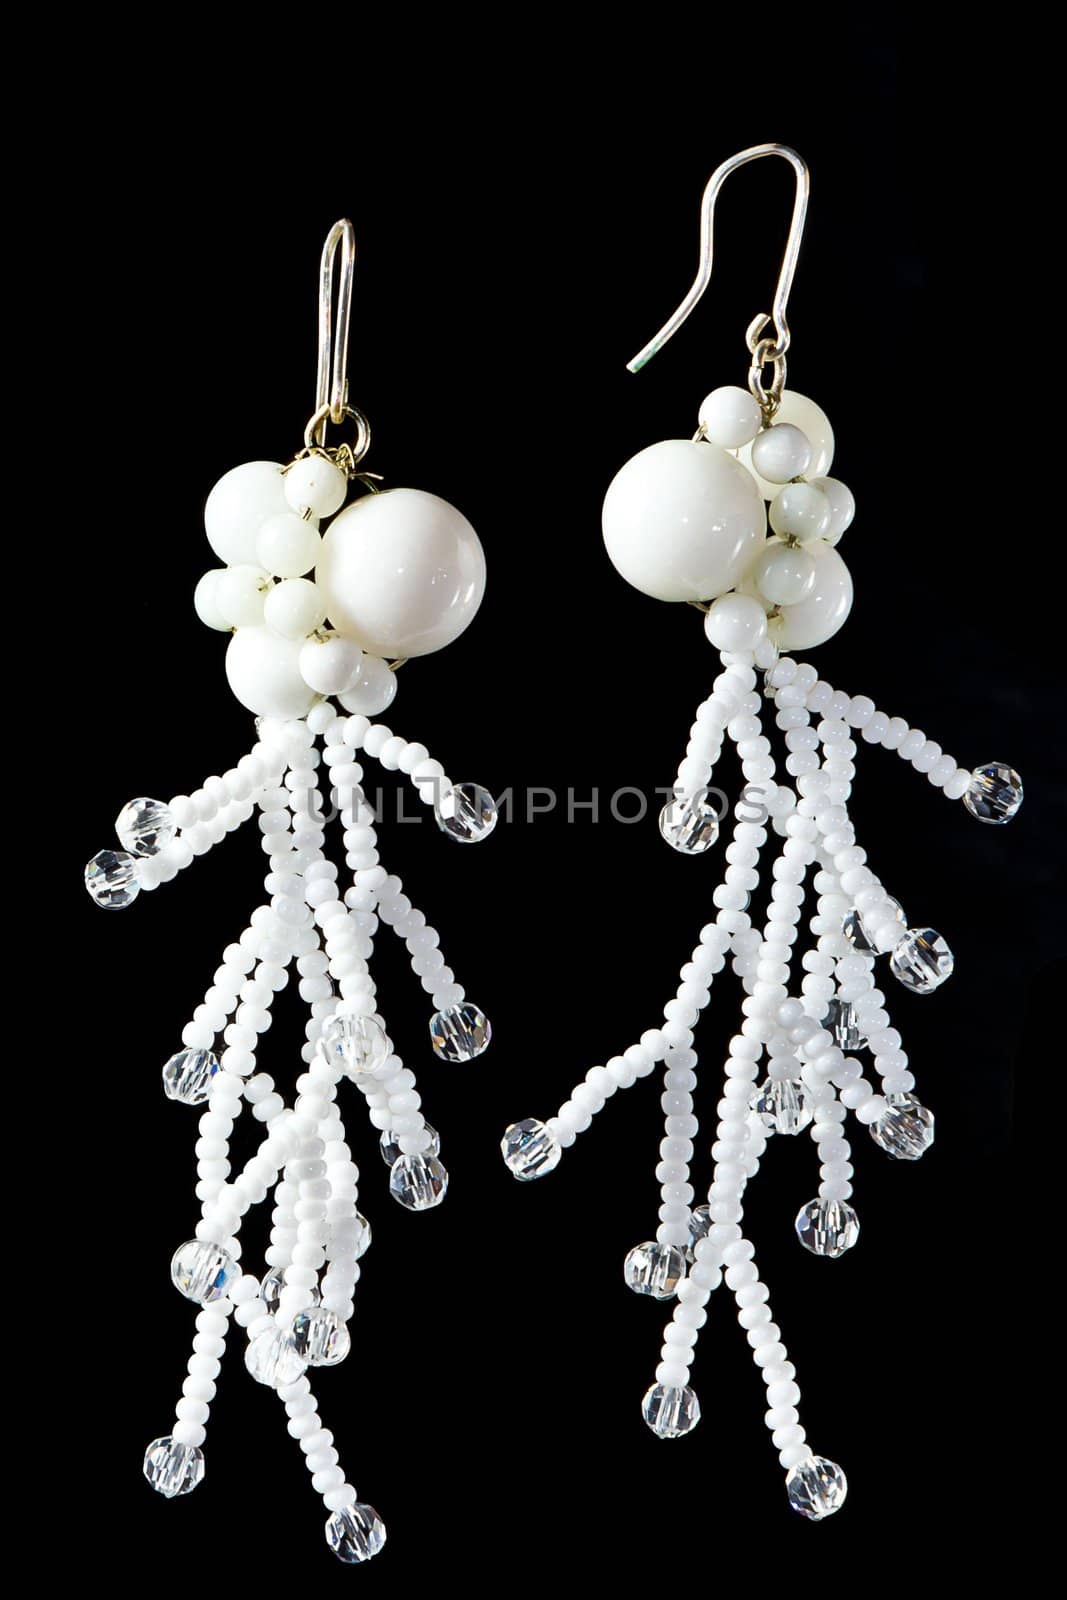 Handmade white snow earrings by AlehElly